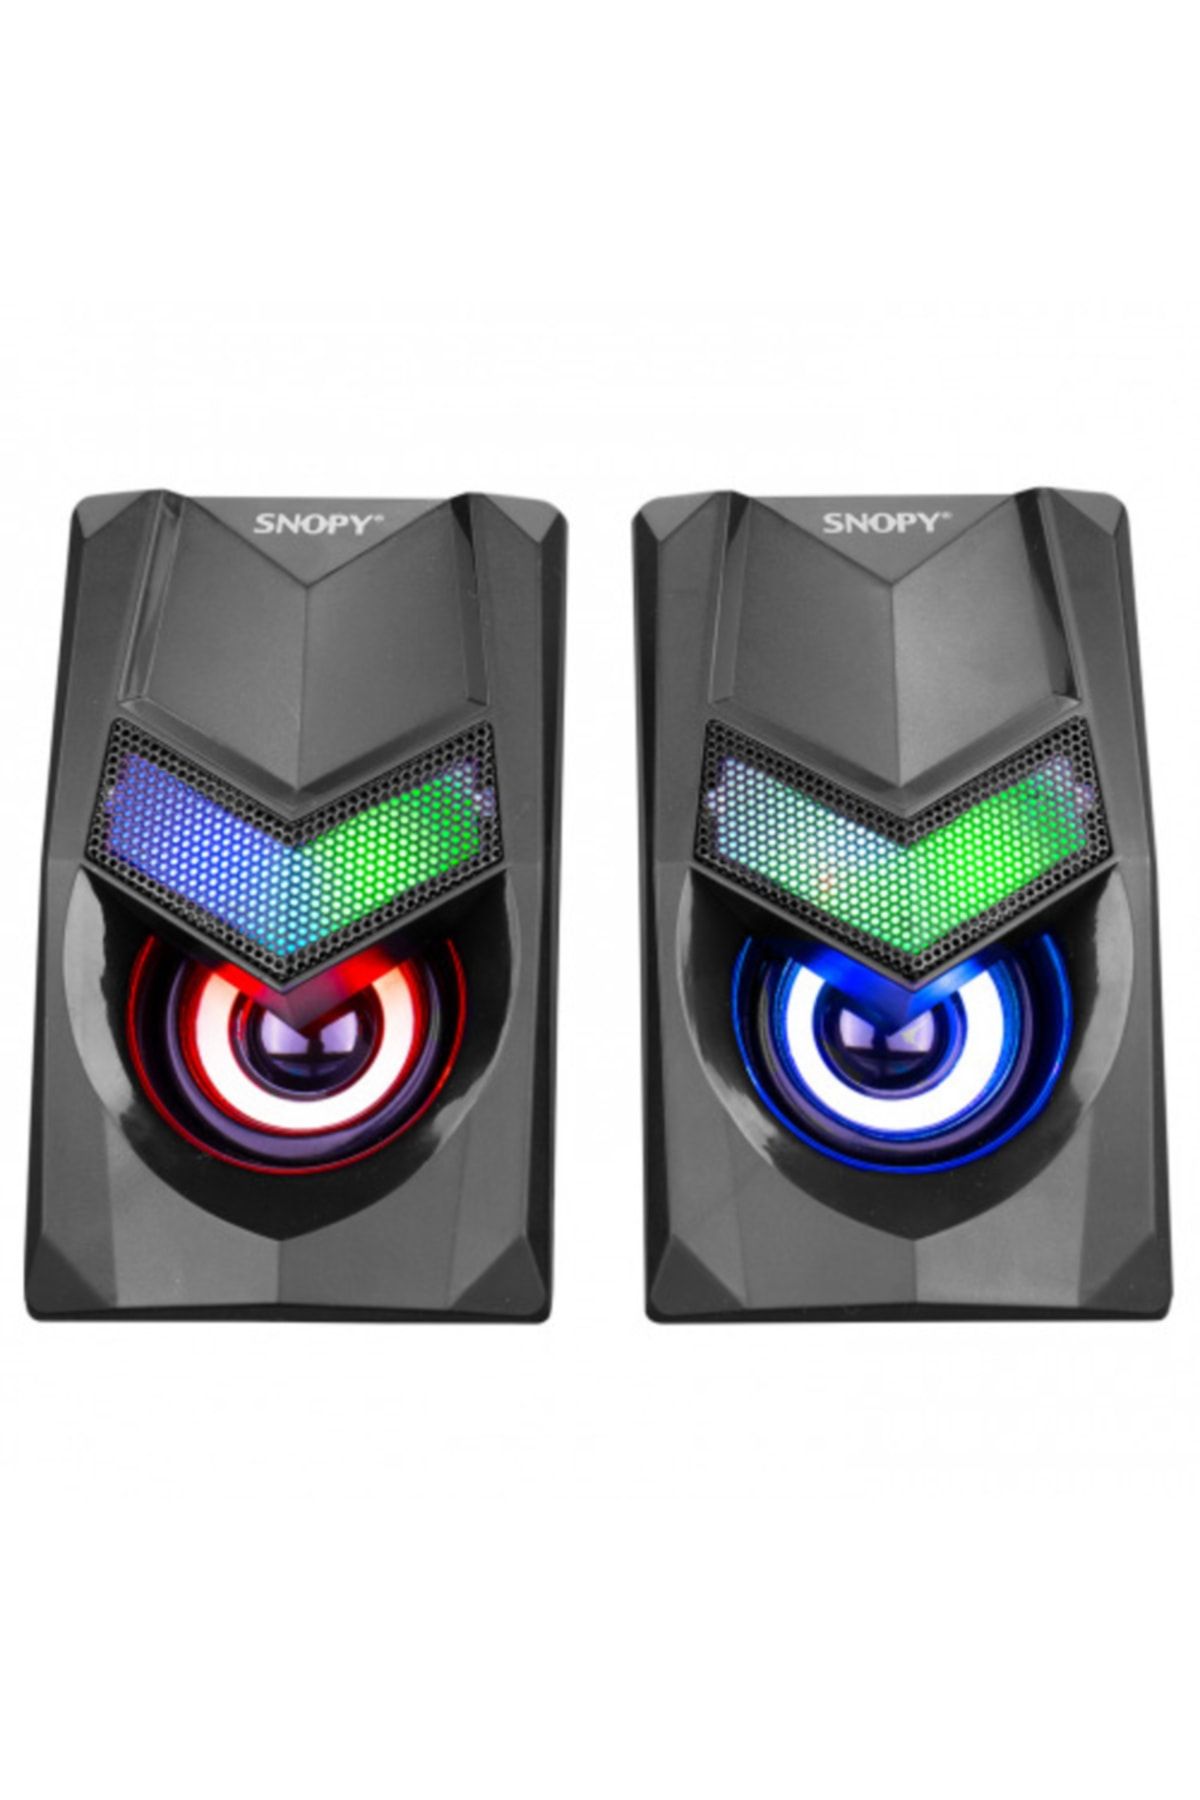 Snopy Gaming Mouse Pad Sn-x25 Multimedia Rgb Işıklı 3w*2 Usb Speaker